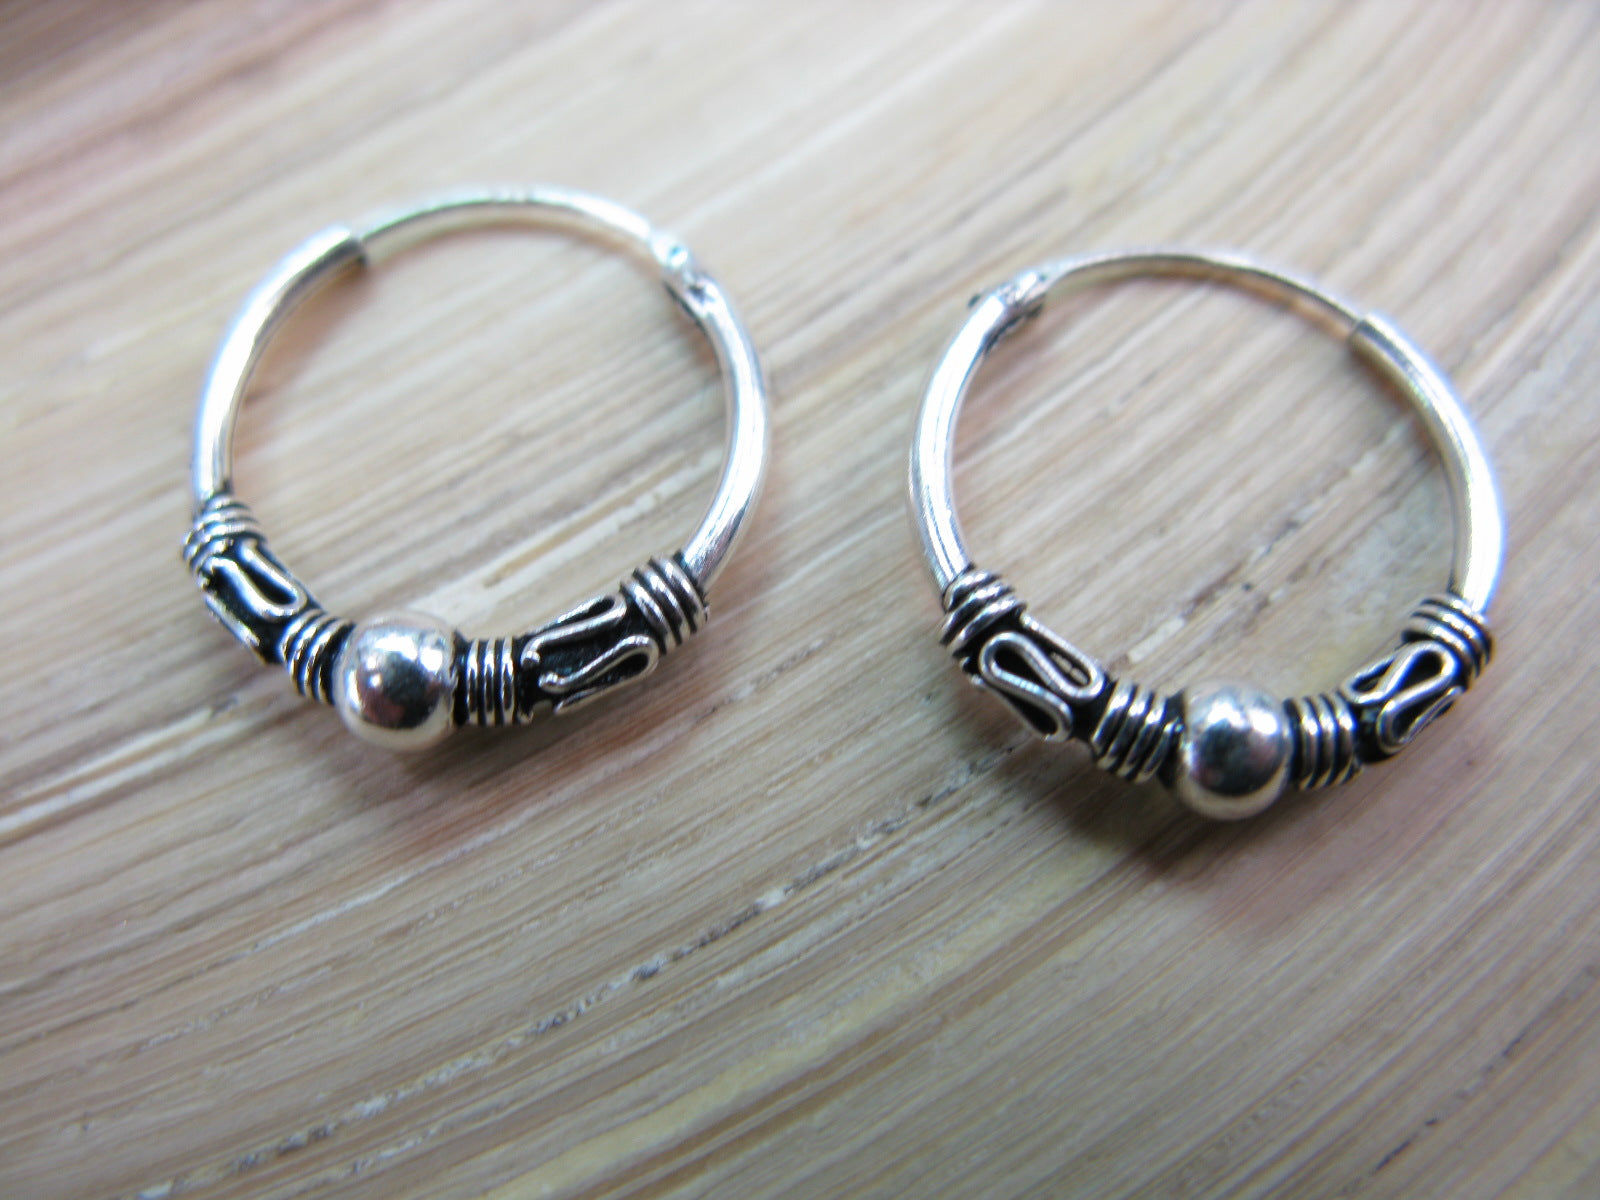 16mm Balinese Oxidized Hoop Earrings in 925 Sterling Silver